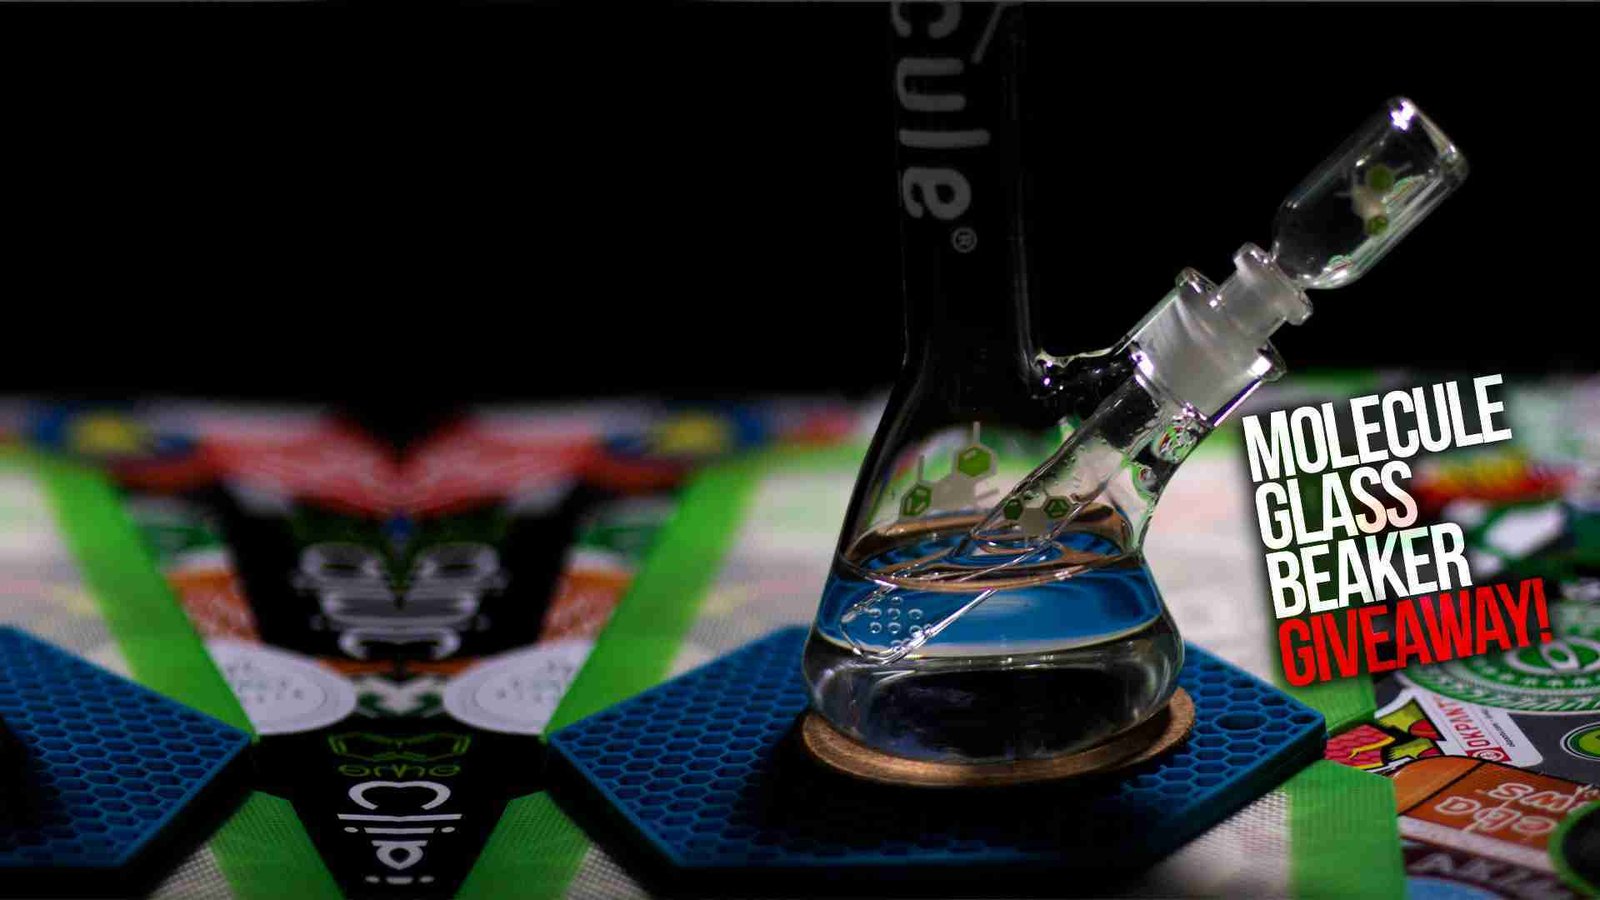 LoudClouds Website Launch/Instagram 2K Giveaway! 14mm Molecule Glass Beaker